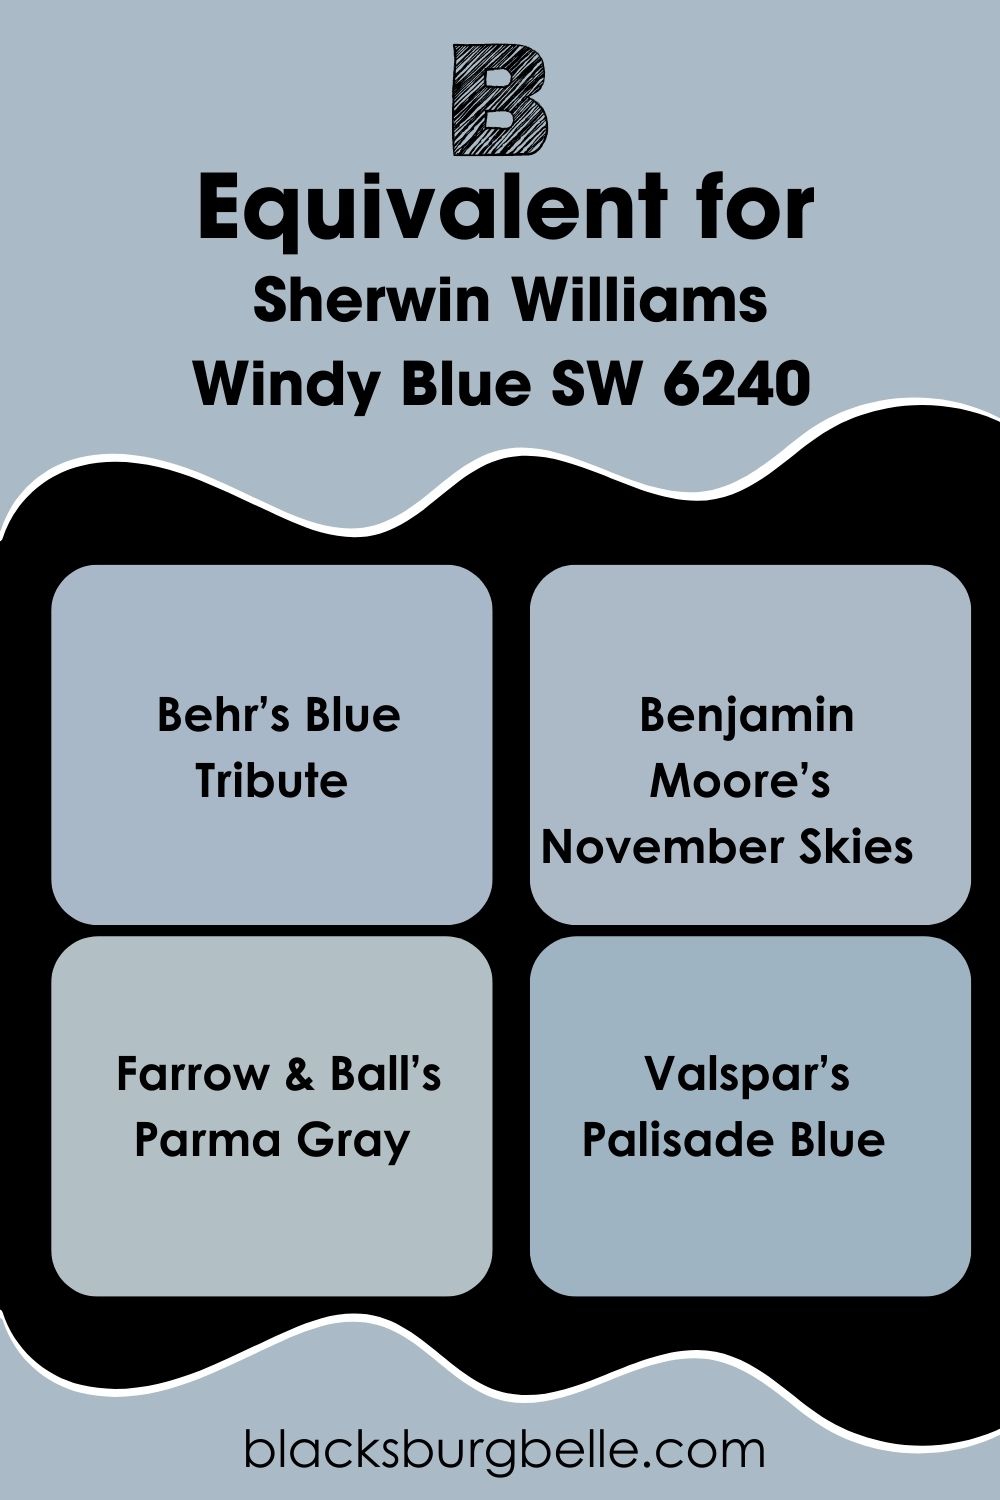 Windy Blue SW 6240 (10)